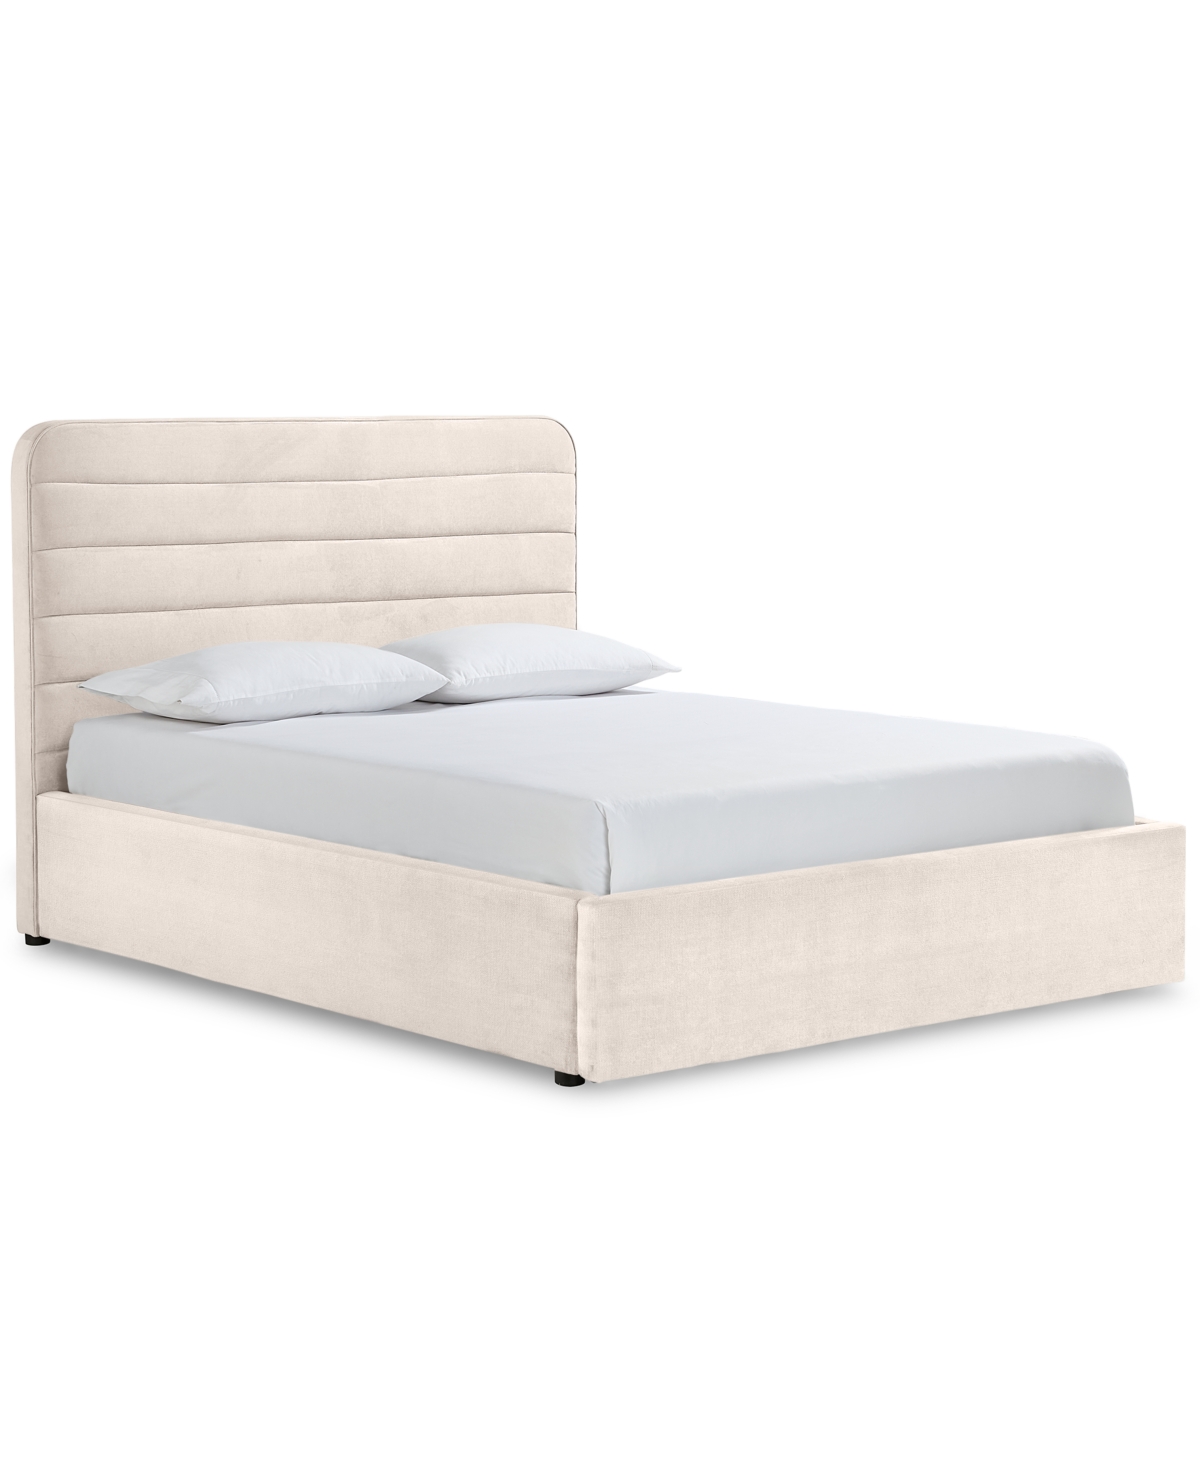 Furniture Haryan Twin Upholstered Storage Bed In Creme